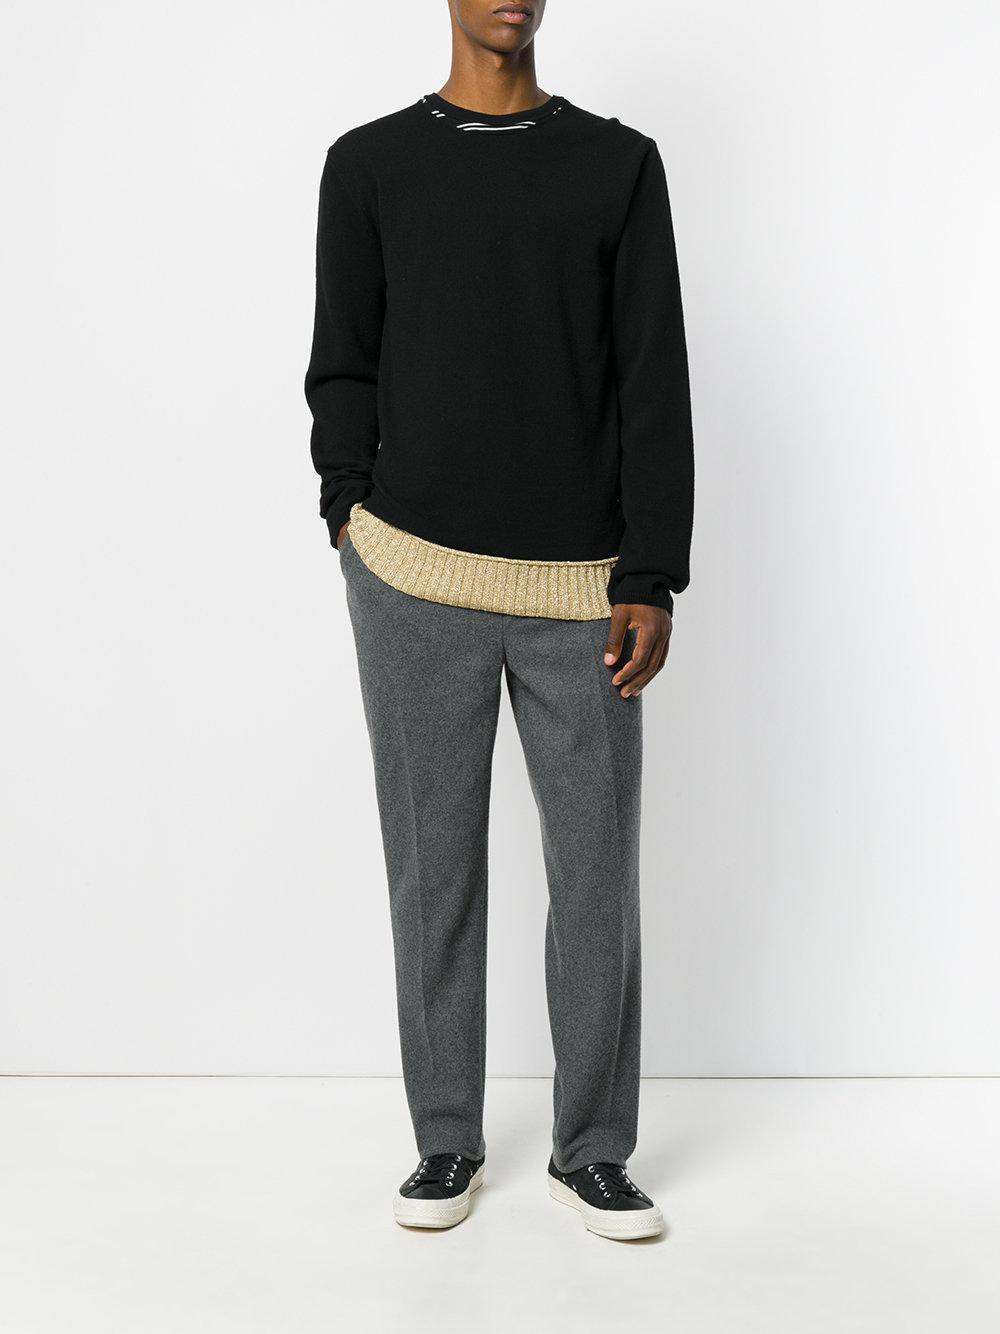 Lyst - Comme Des Garçons Contrast Hem Knitted Sweater in Black